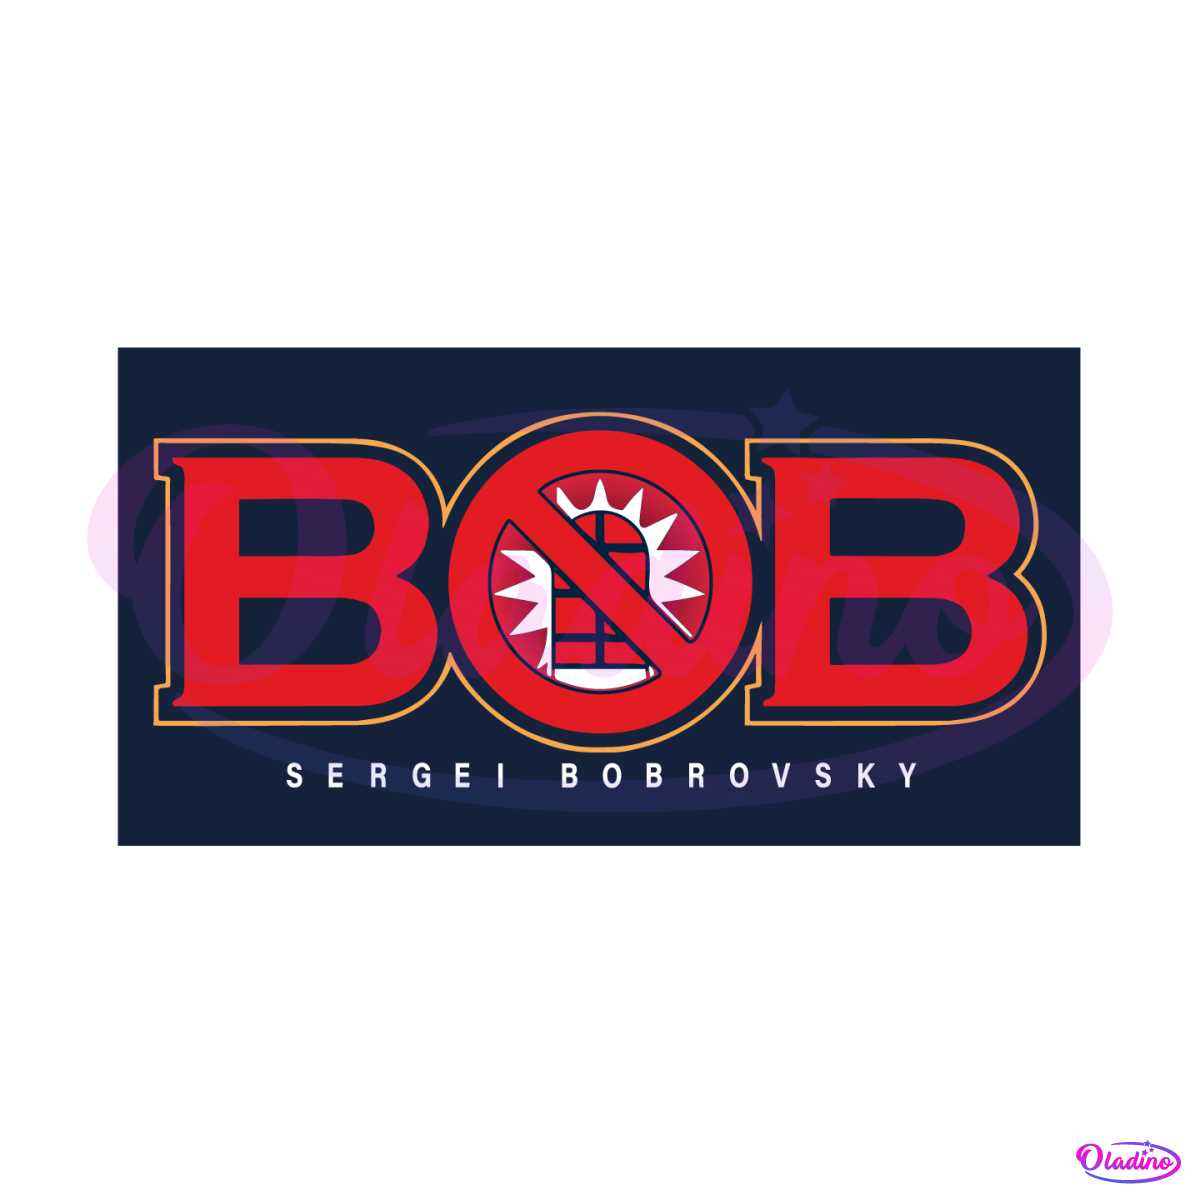 sergei-bobrovsky-bob-svg-best-graphic-designs-cutting-files